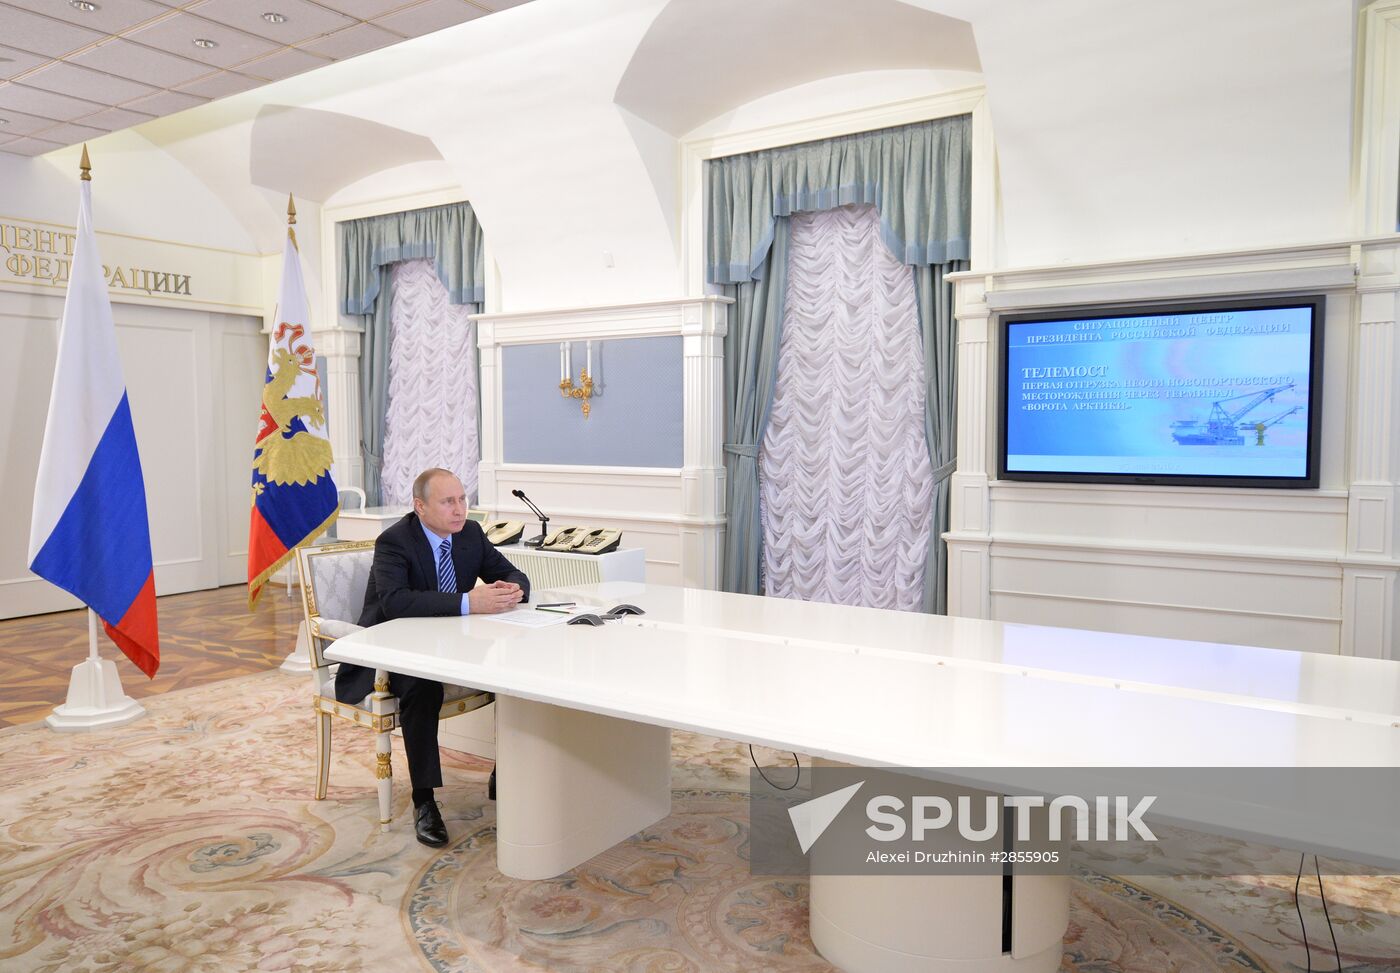 President Vladimir Putin launched oil loading at Arctic Gate terminal in Yamal